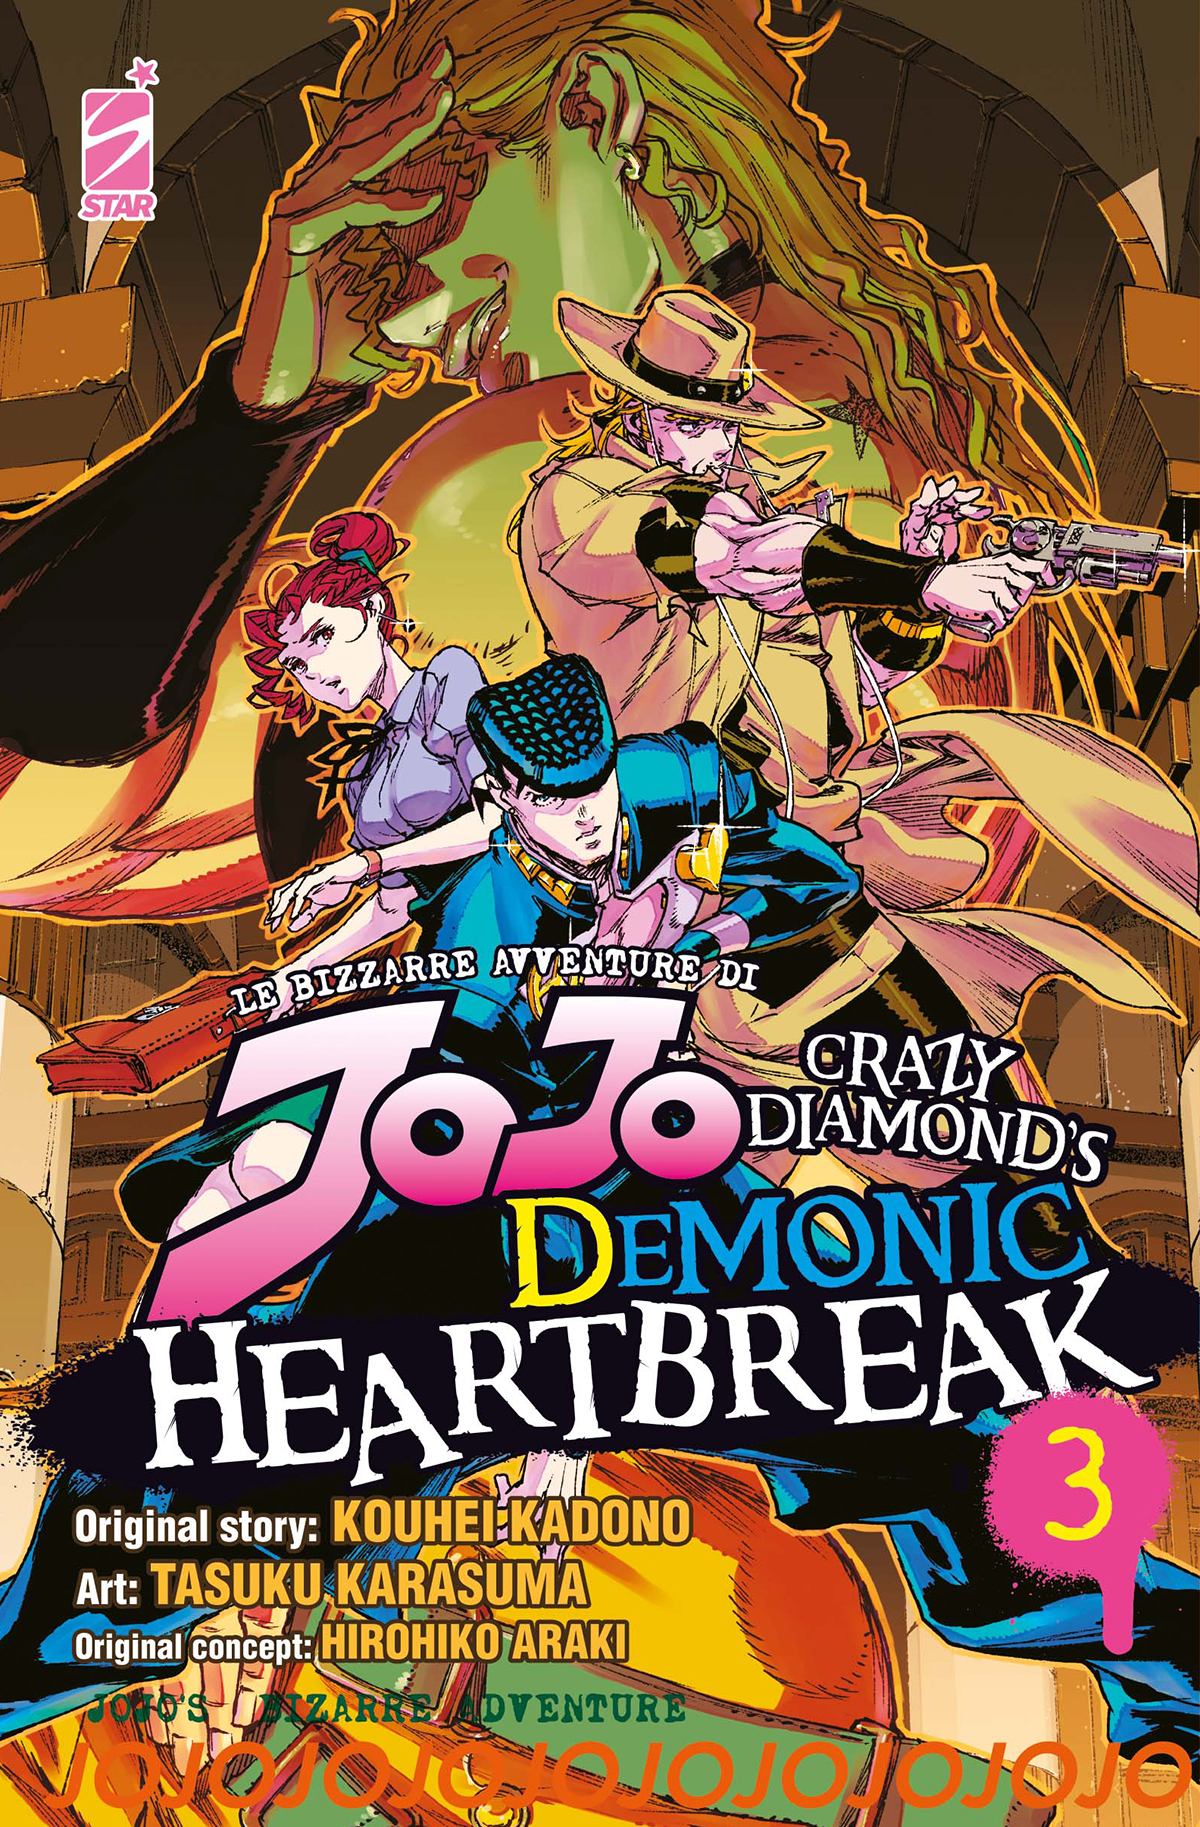 ACTION #356 JOJO CRAZY DIAMOND'S DEMONIC HEARTBREAK N.03